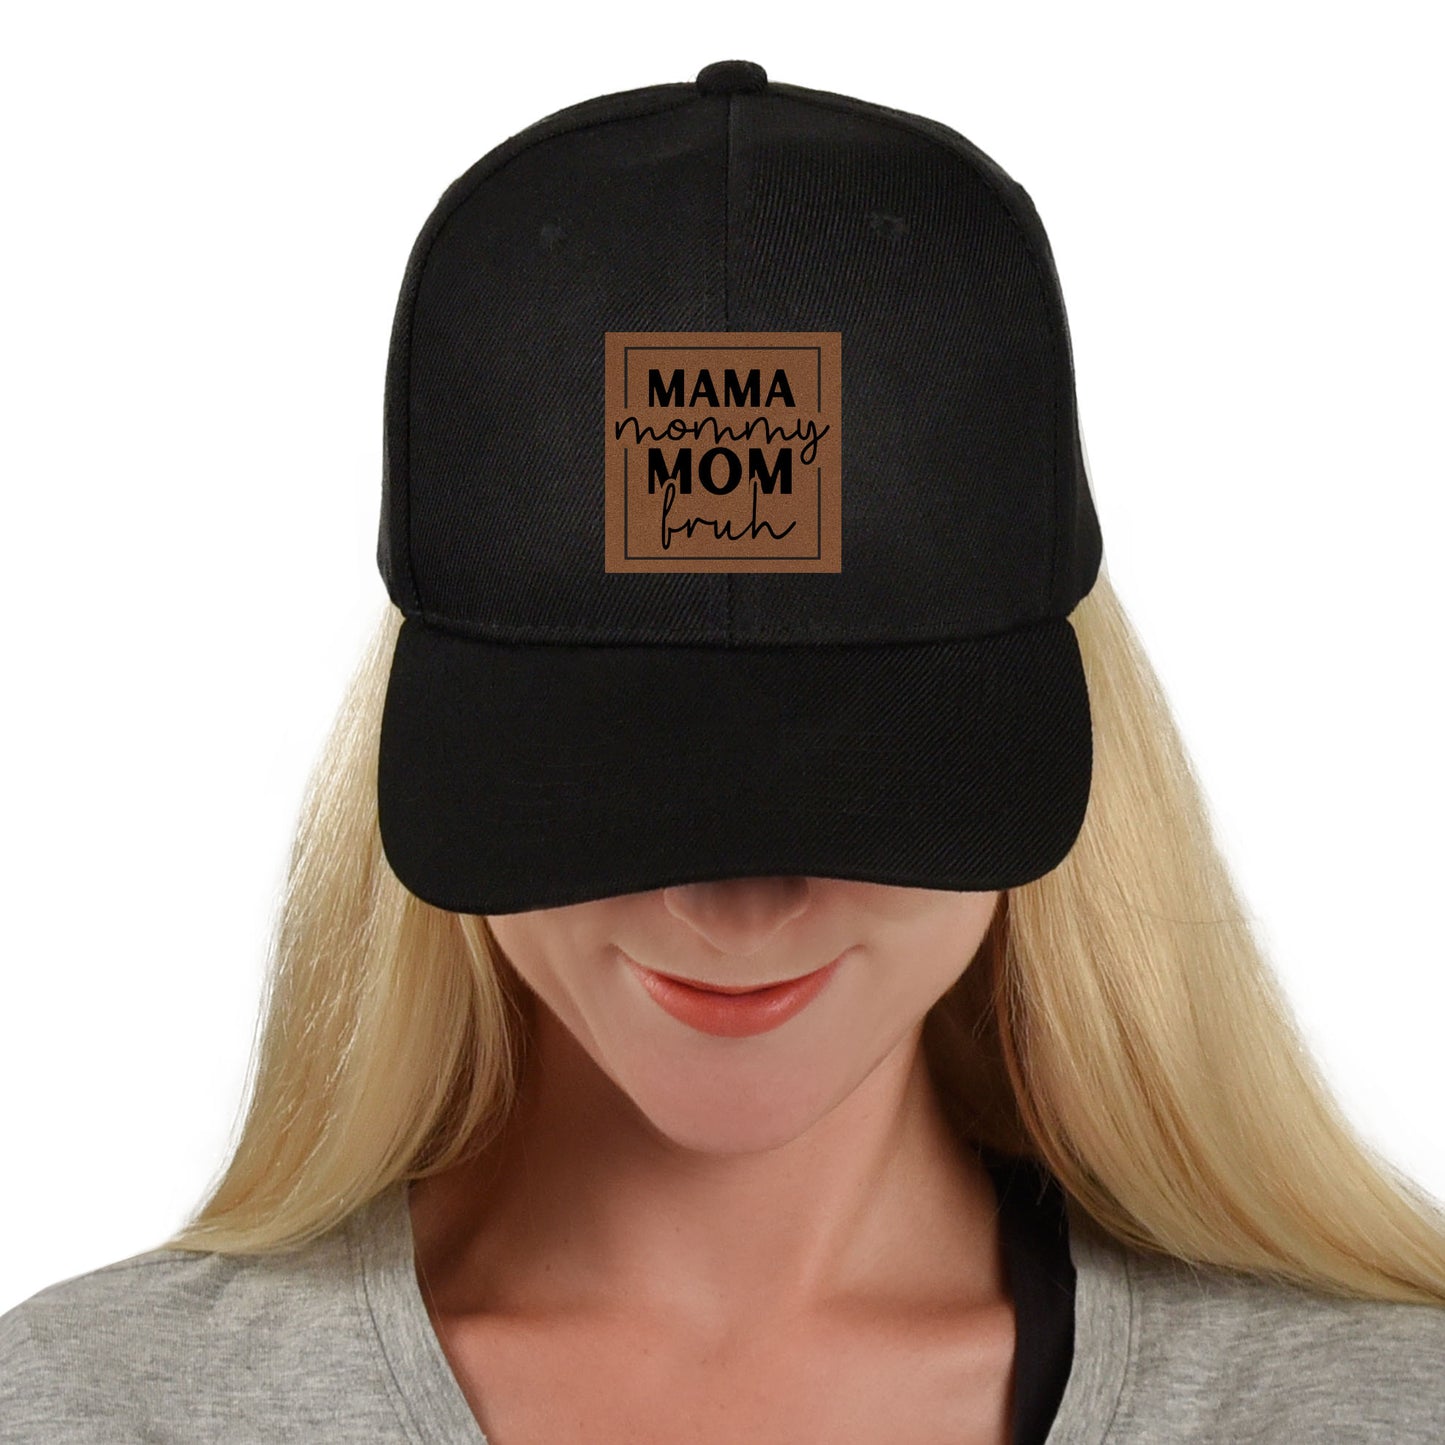 Mom Hats- Women's Snapback Hats mom, mommy, bruh hat